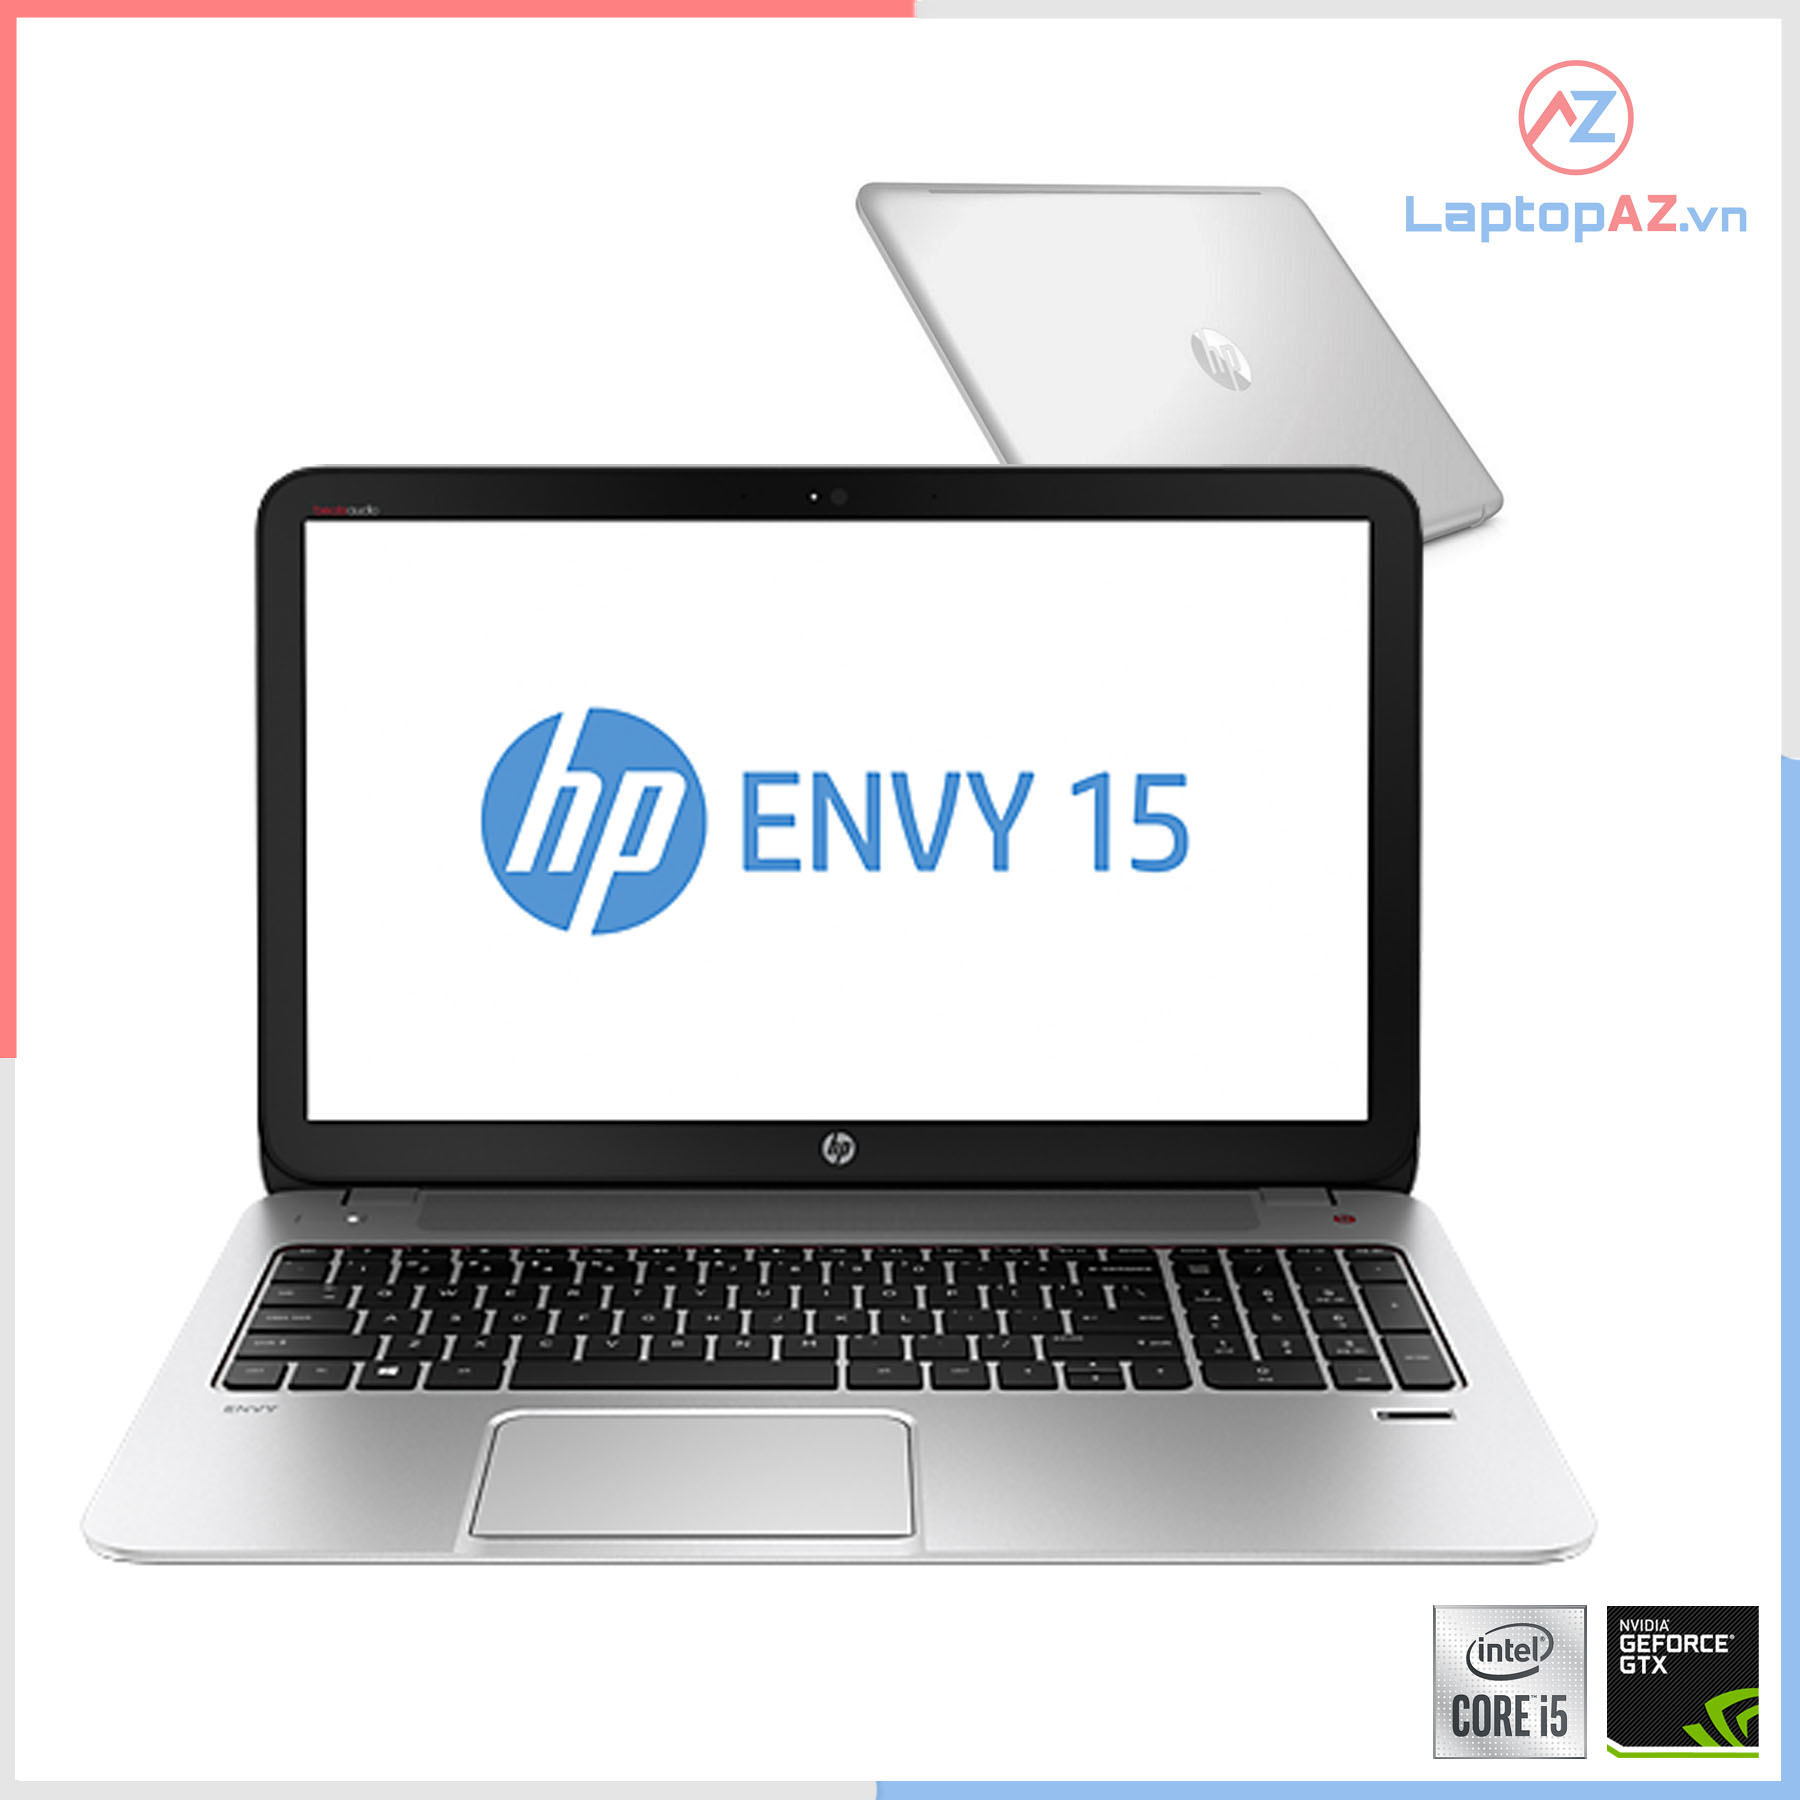 Laptop HP ENVY 15 (Core i5-6200U, 8GB, 500GB, VGA 4GB NVIDIA GeForce GTX 950M, 15.6 FullHD)